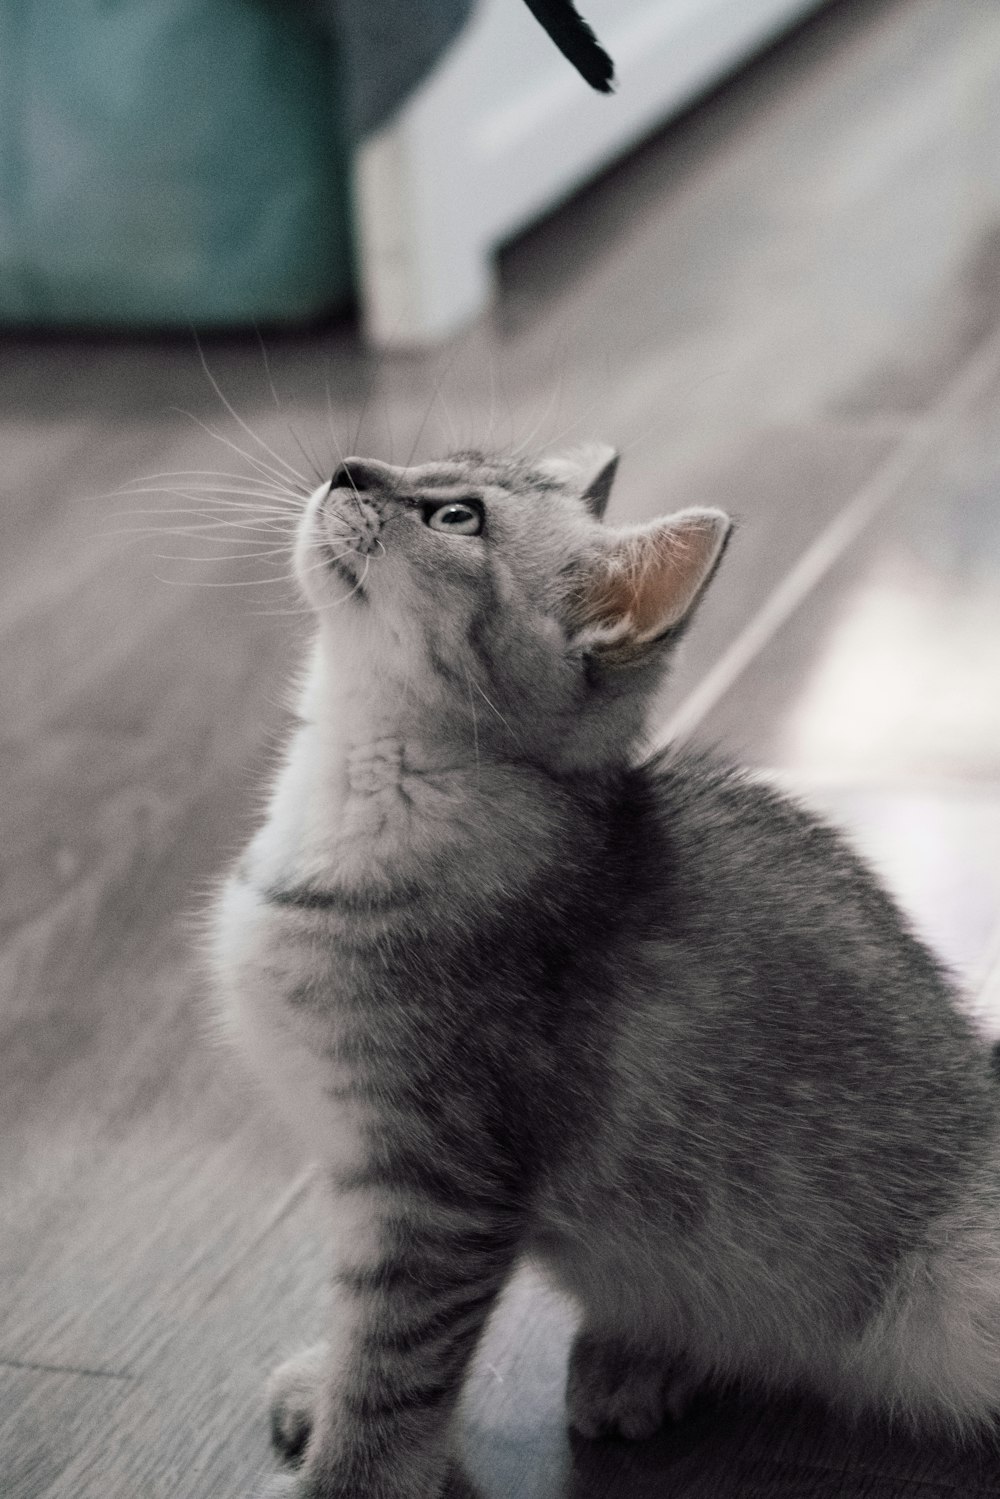 grey and white tabby kitten